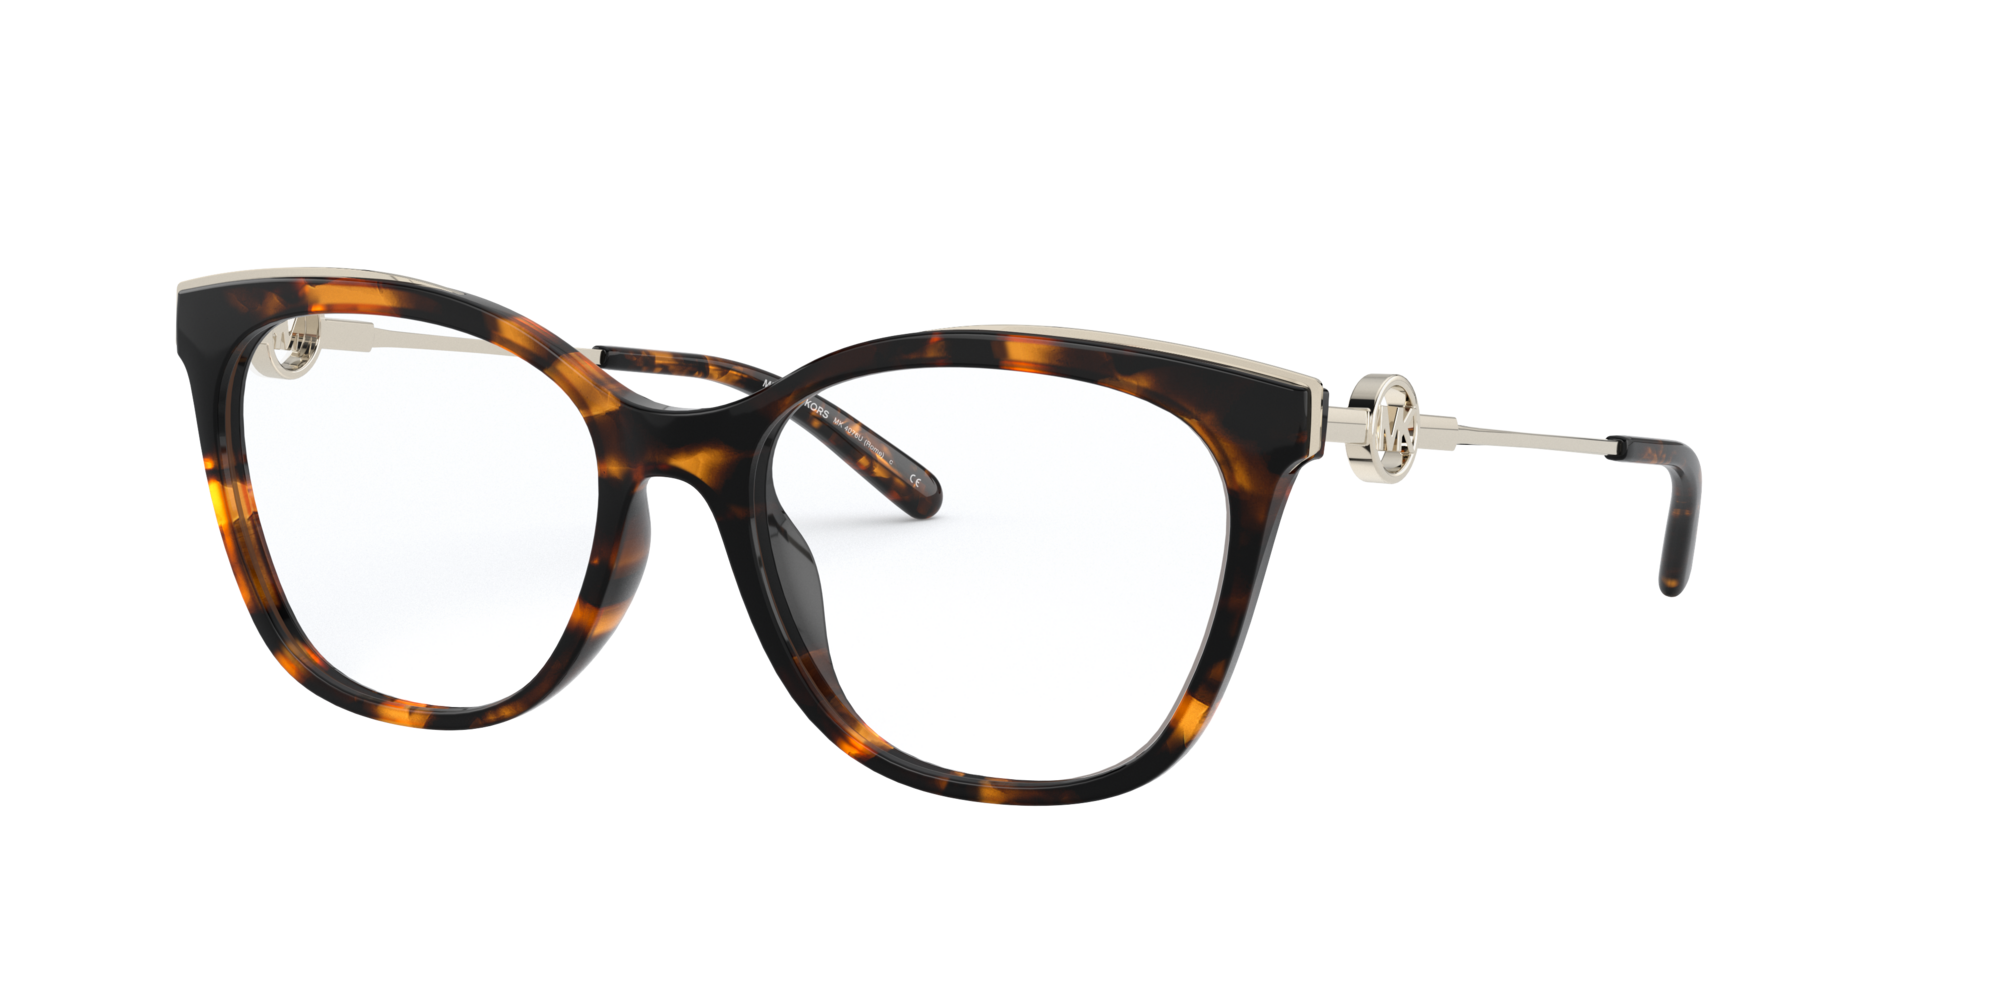 Michael Kors Glasses Sunglasses  Frames  Glassescom